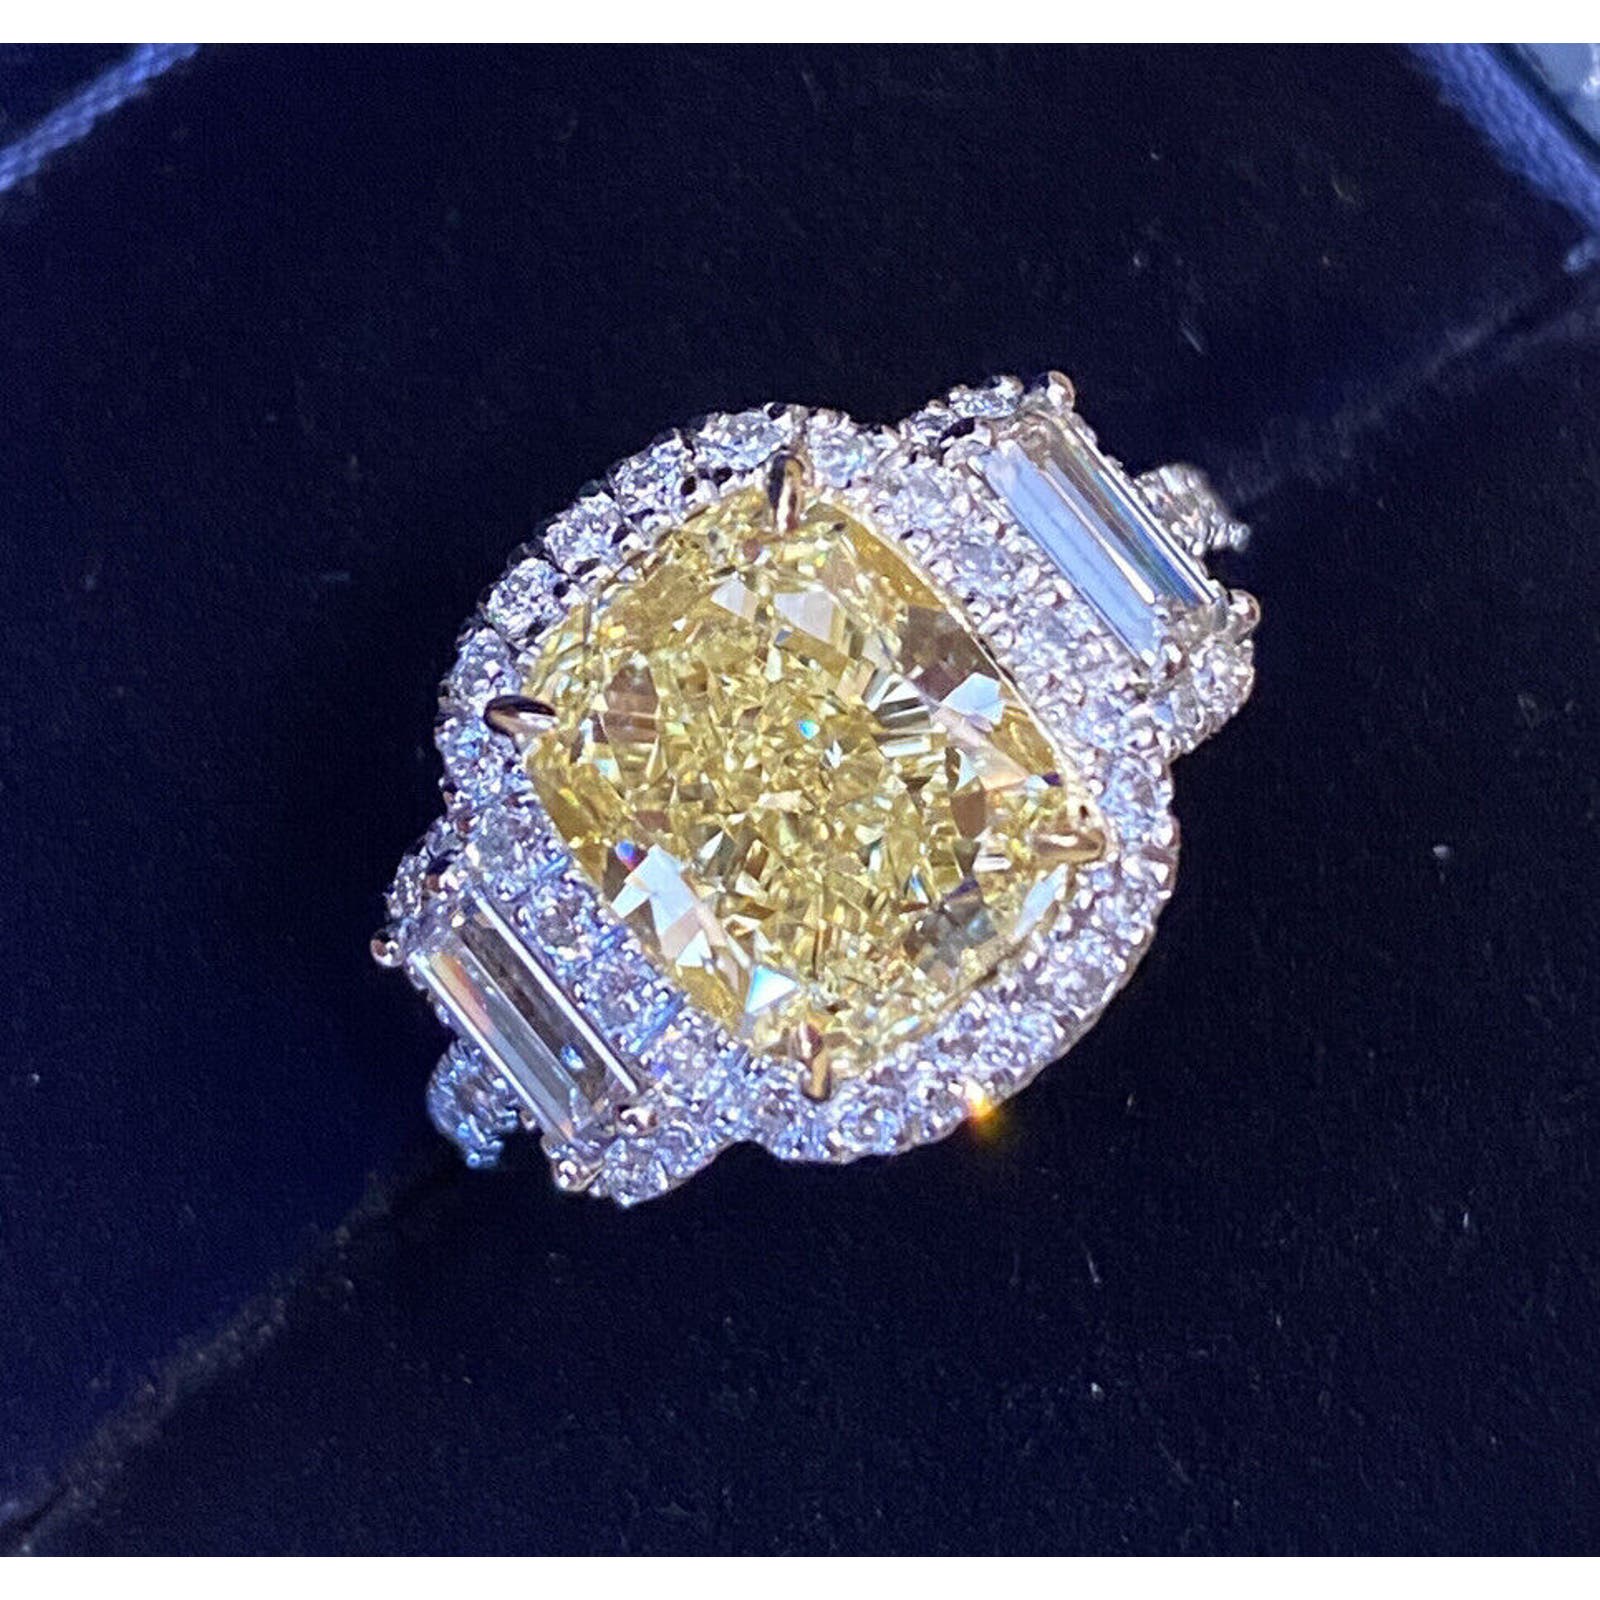 GIA 4.02 ct Fancy Yellow Cushion VS1 Diamond Ring in Plat & 18k Gold - HM2384BV